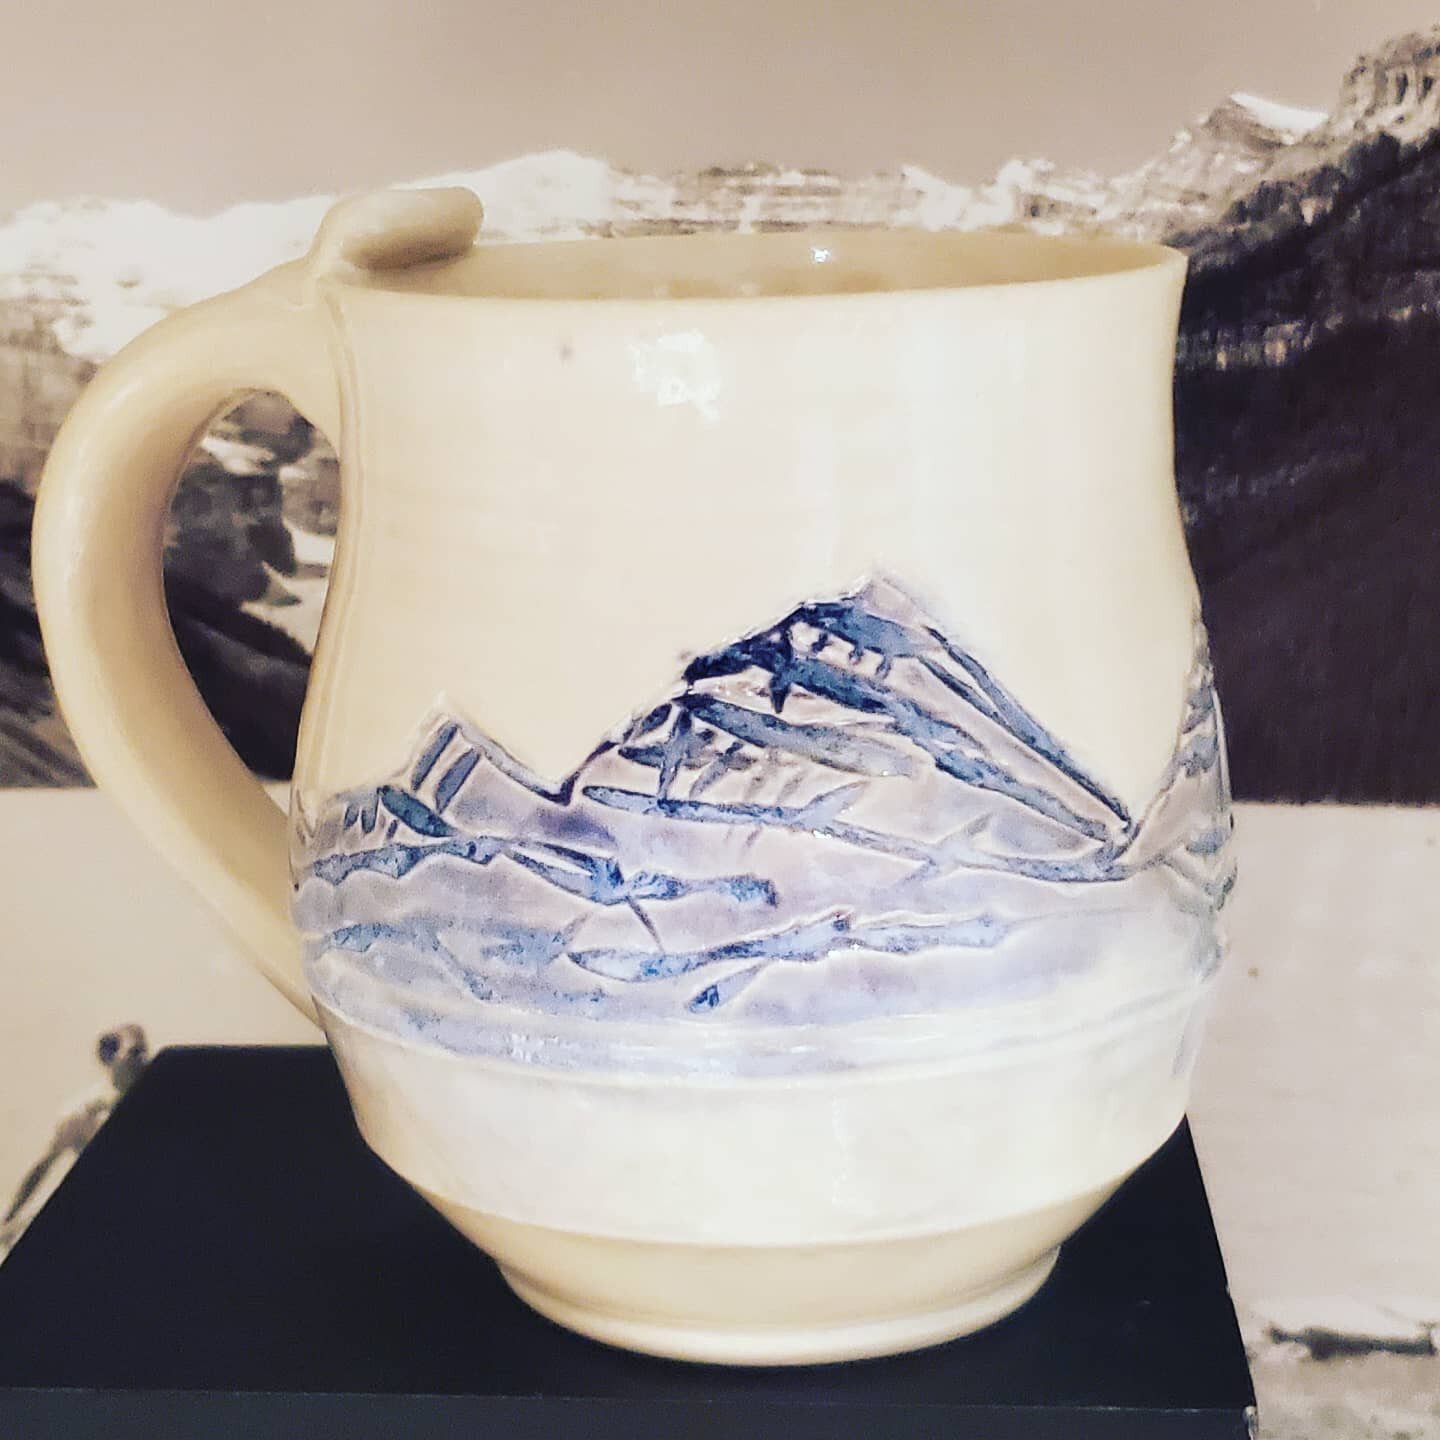 Todays close up mug shot brought to you by this purple beauty 

#madewithlove #ciarajayneceramics #ciarajayne #craft #mountains #mybanff #madeinBanff #mountainmug #pottery #potteryofinstagram #ceramics #ceramicsofinstagram #plainsmanclay #m370 #handm